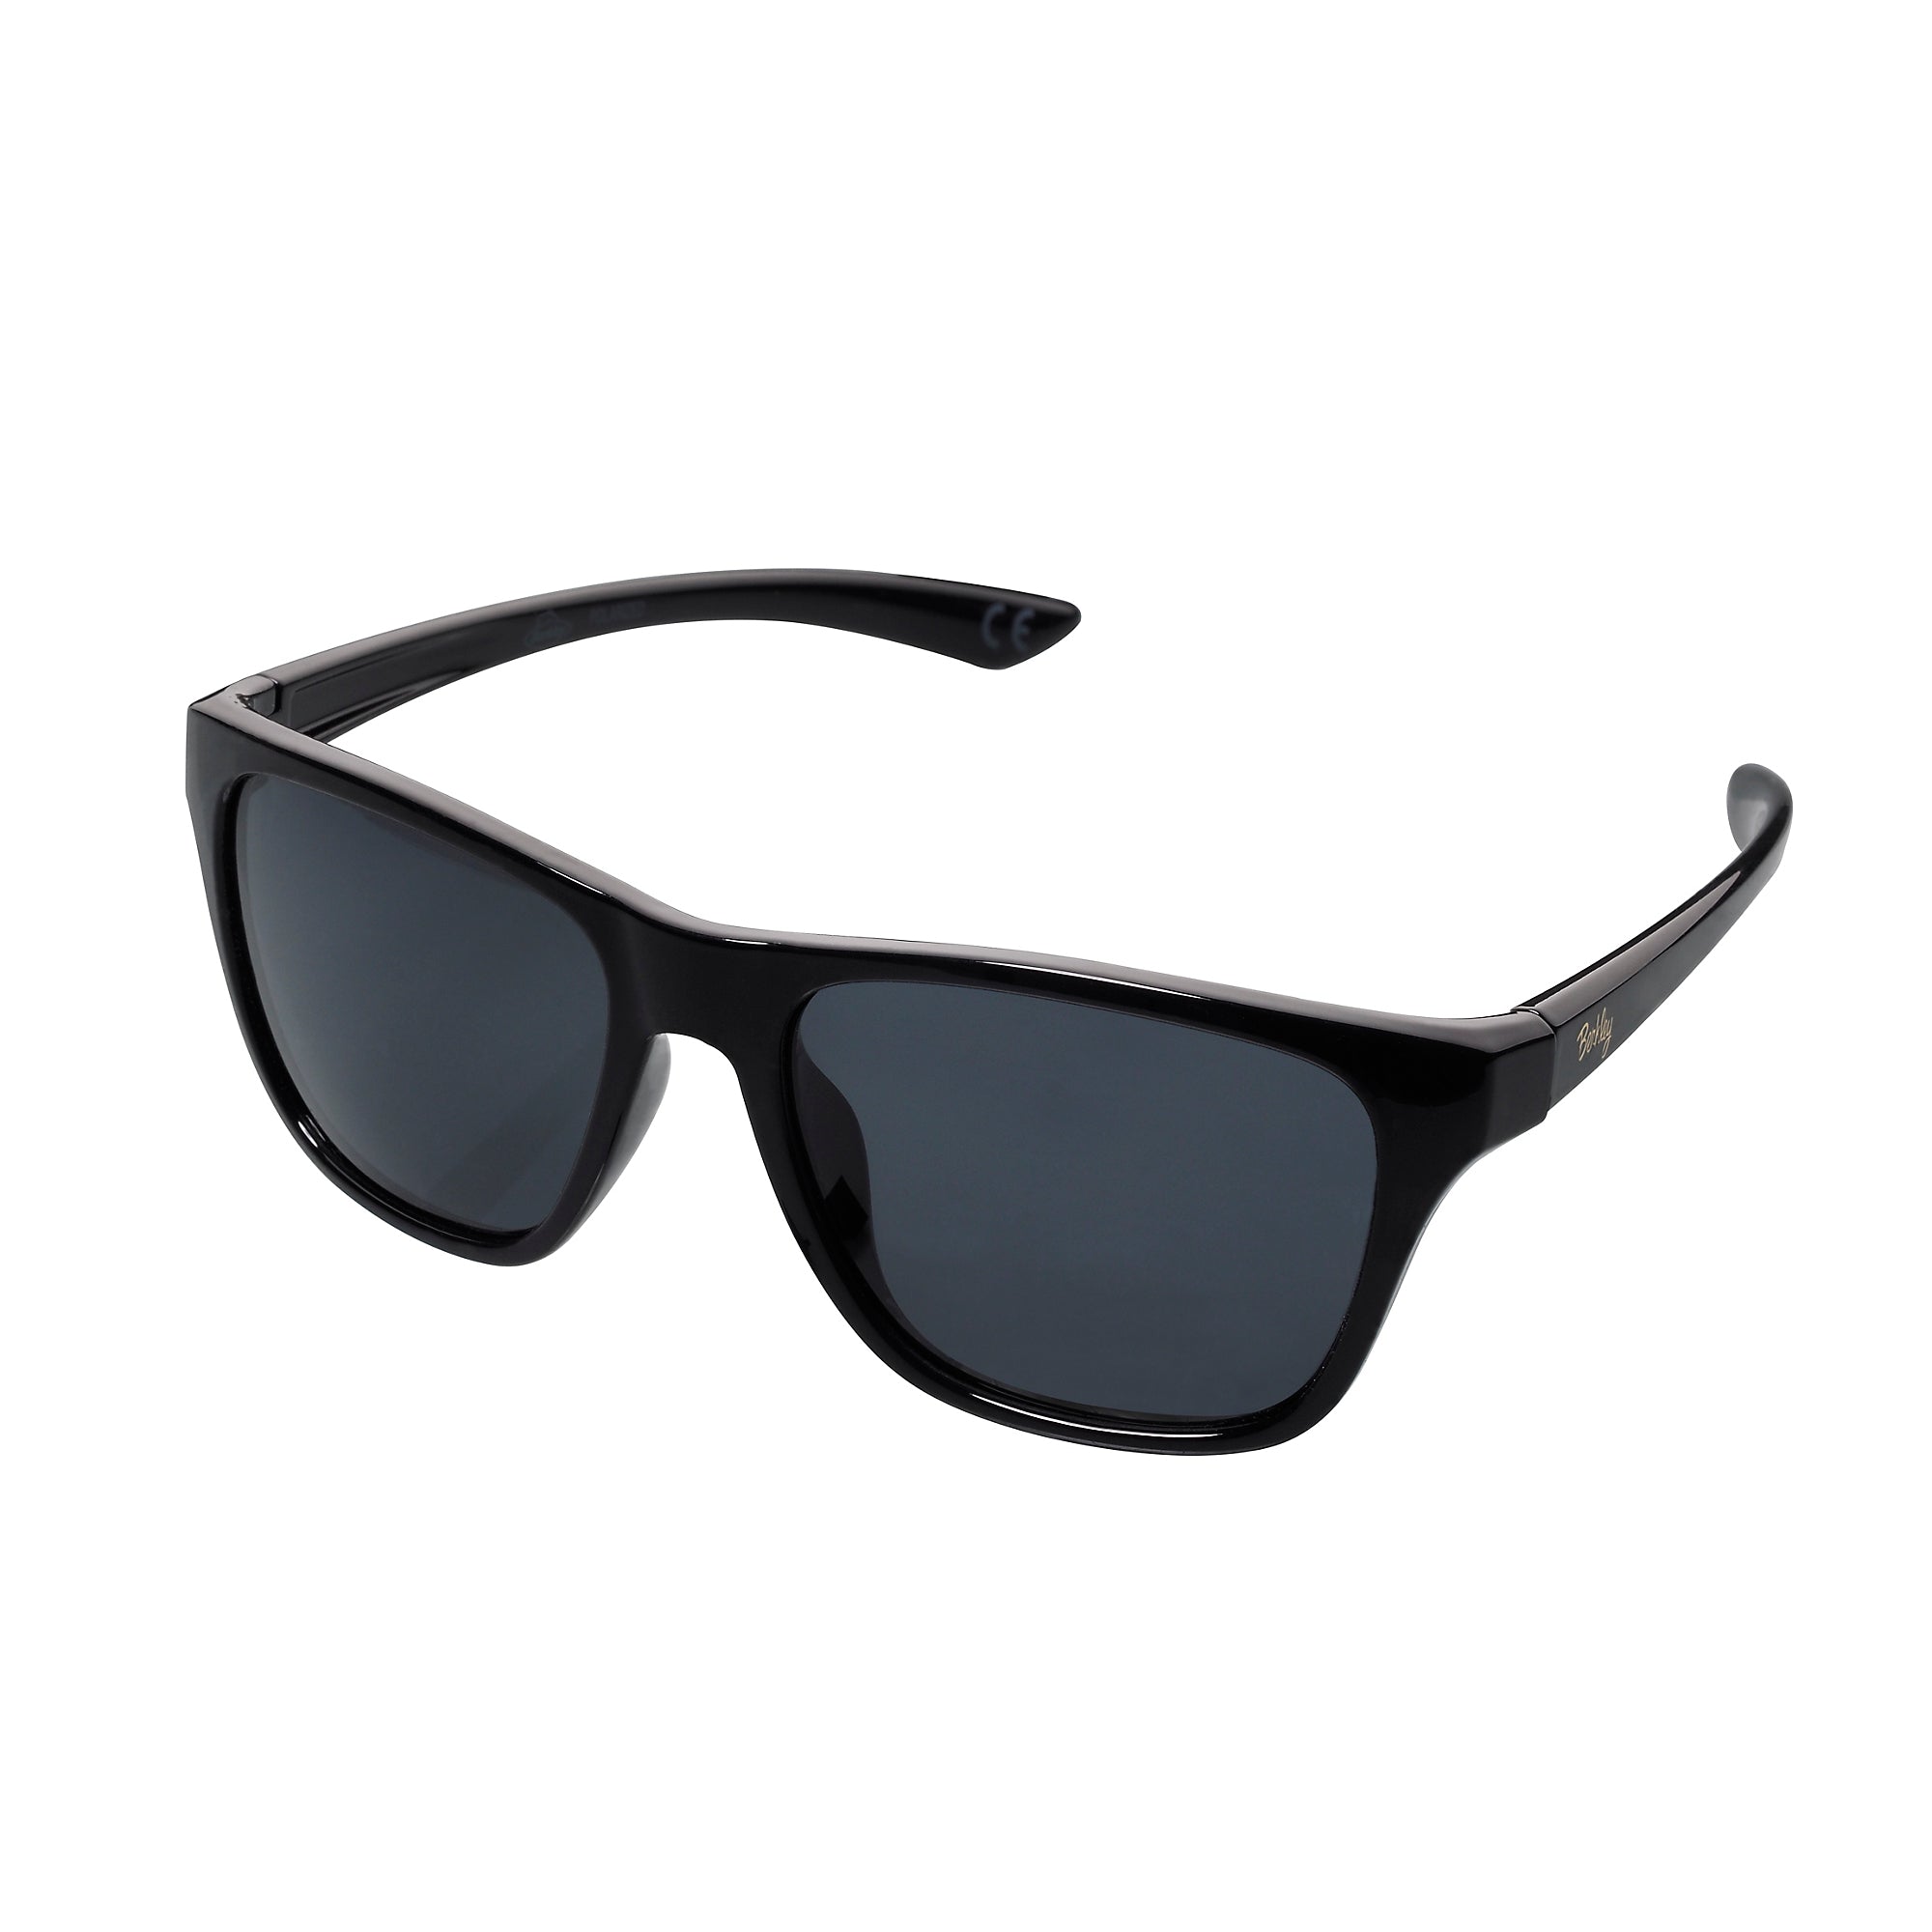 Berkley URBN Sunglasses (Red Frame) Fly Fishing Polarized Sunglasses